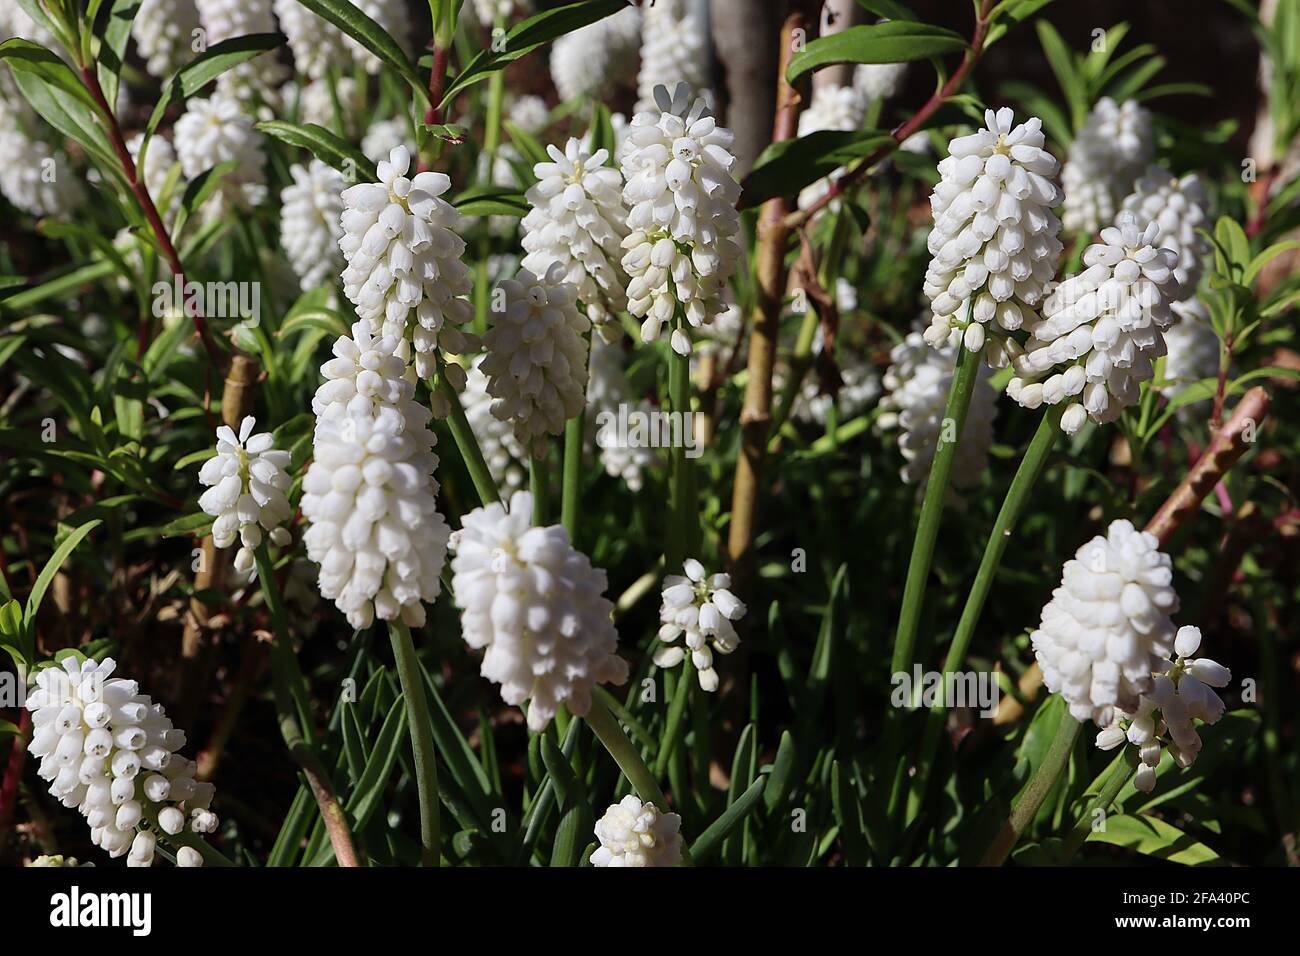 Muscari aucheri ‘White Magic’ grape hyacinth White Magic – small white urn-shaped flowers in cylindrical cluster, April, England, UK Stock Photo